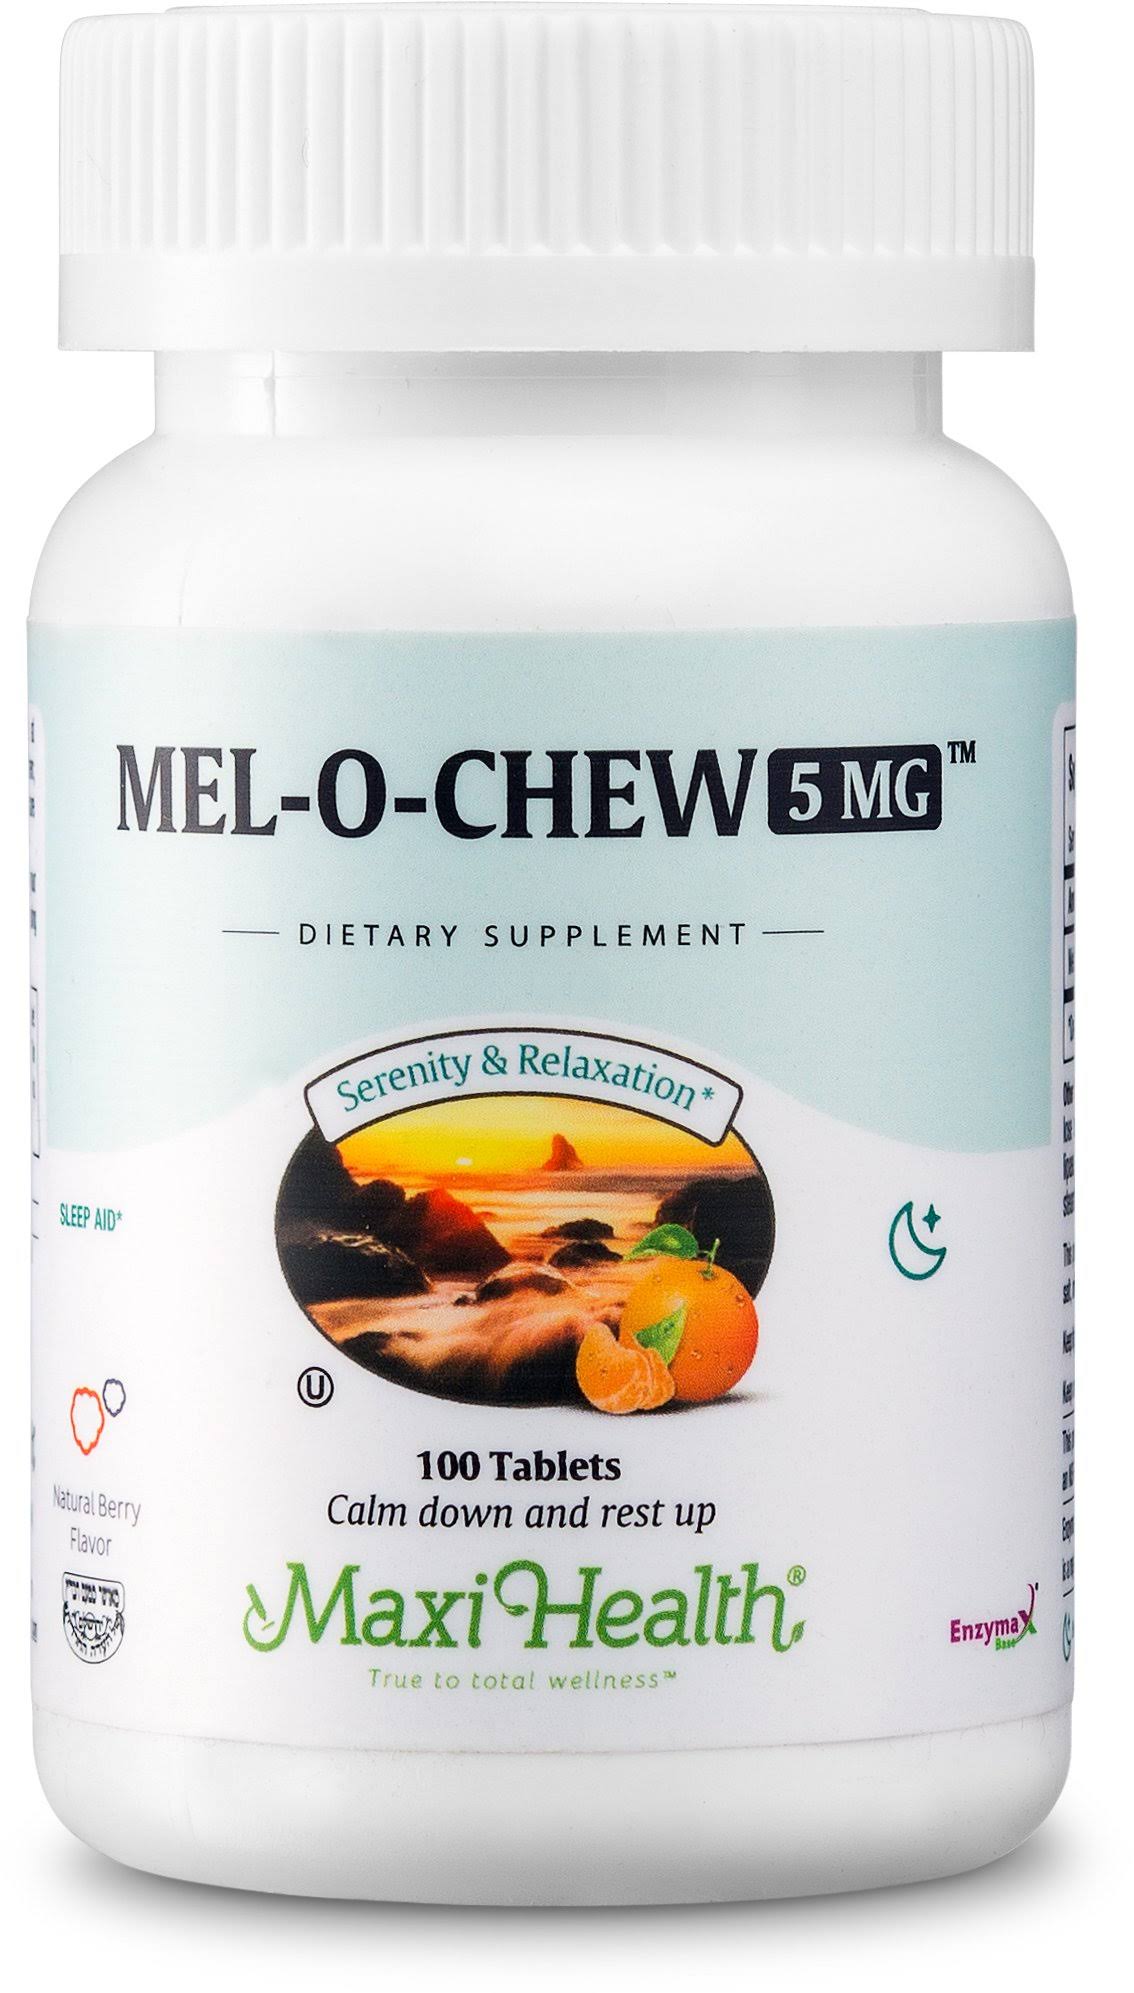 Maxi Health Extra-Strength Mel-O-Chew 5 mg Kosher Chewable Melatonin, Berry Flavor, 100 Count